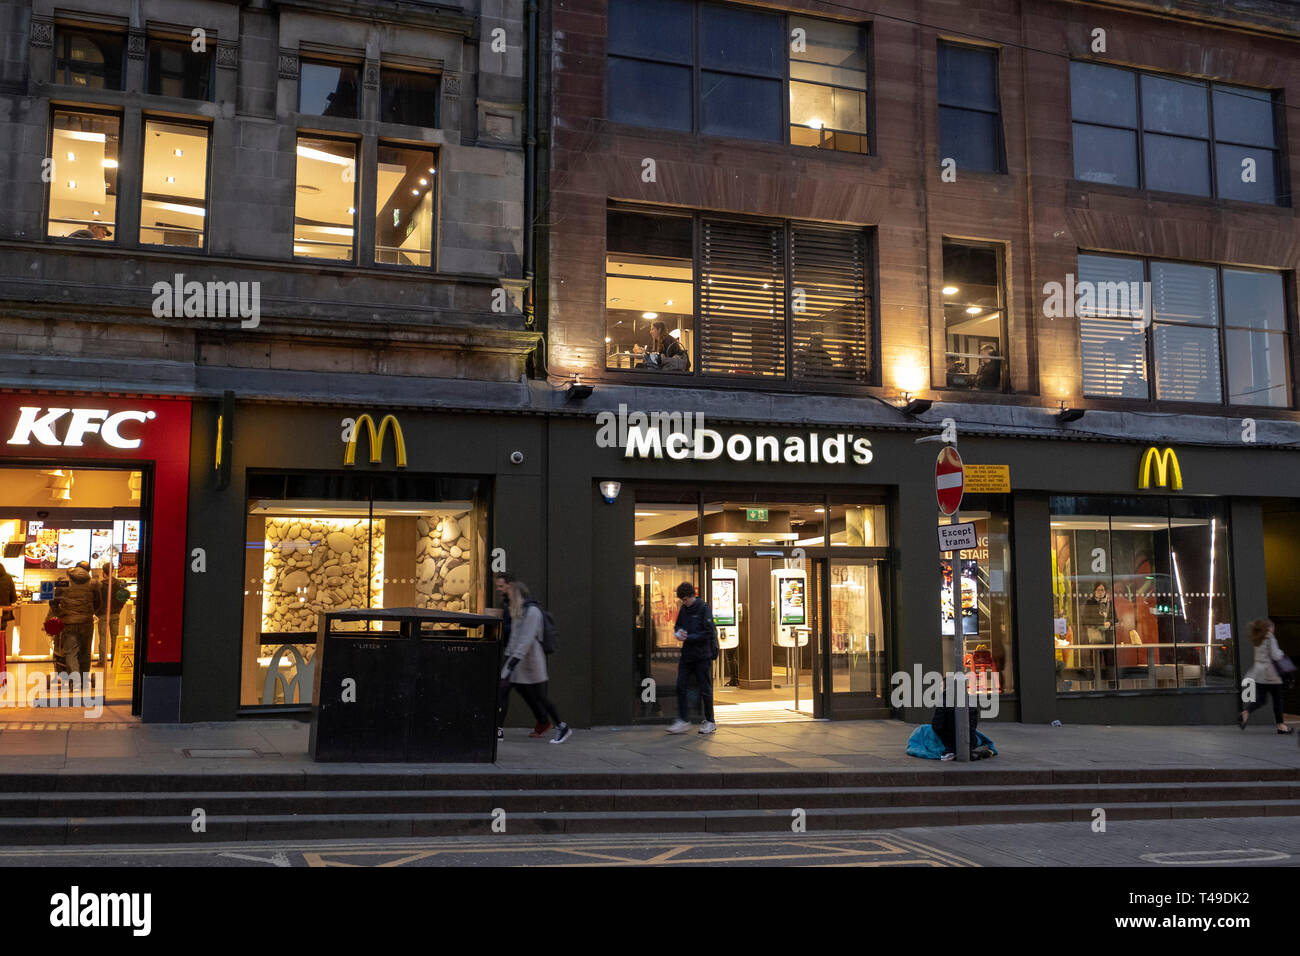 McDonald's and KFC fast food restaurants in St Andrew street, Edinburgh, Scotland, UK, Europe Stock Photo